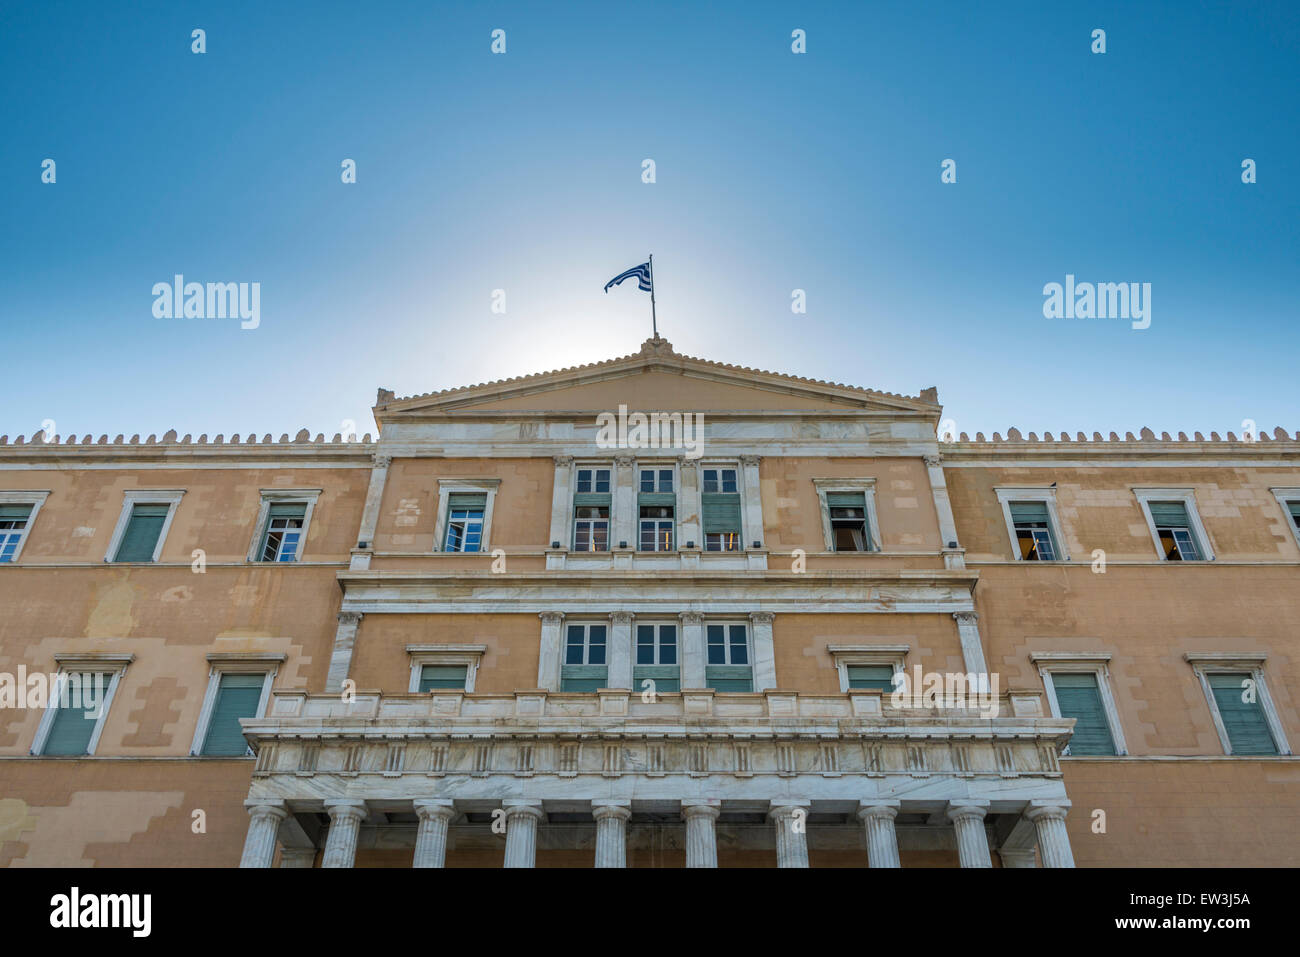 La façade de l'édifice du Parlement grec à la place Syntagma, Athènes Banque D'Images